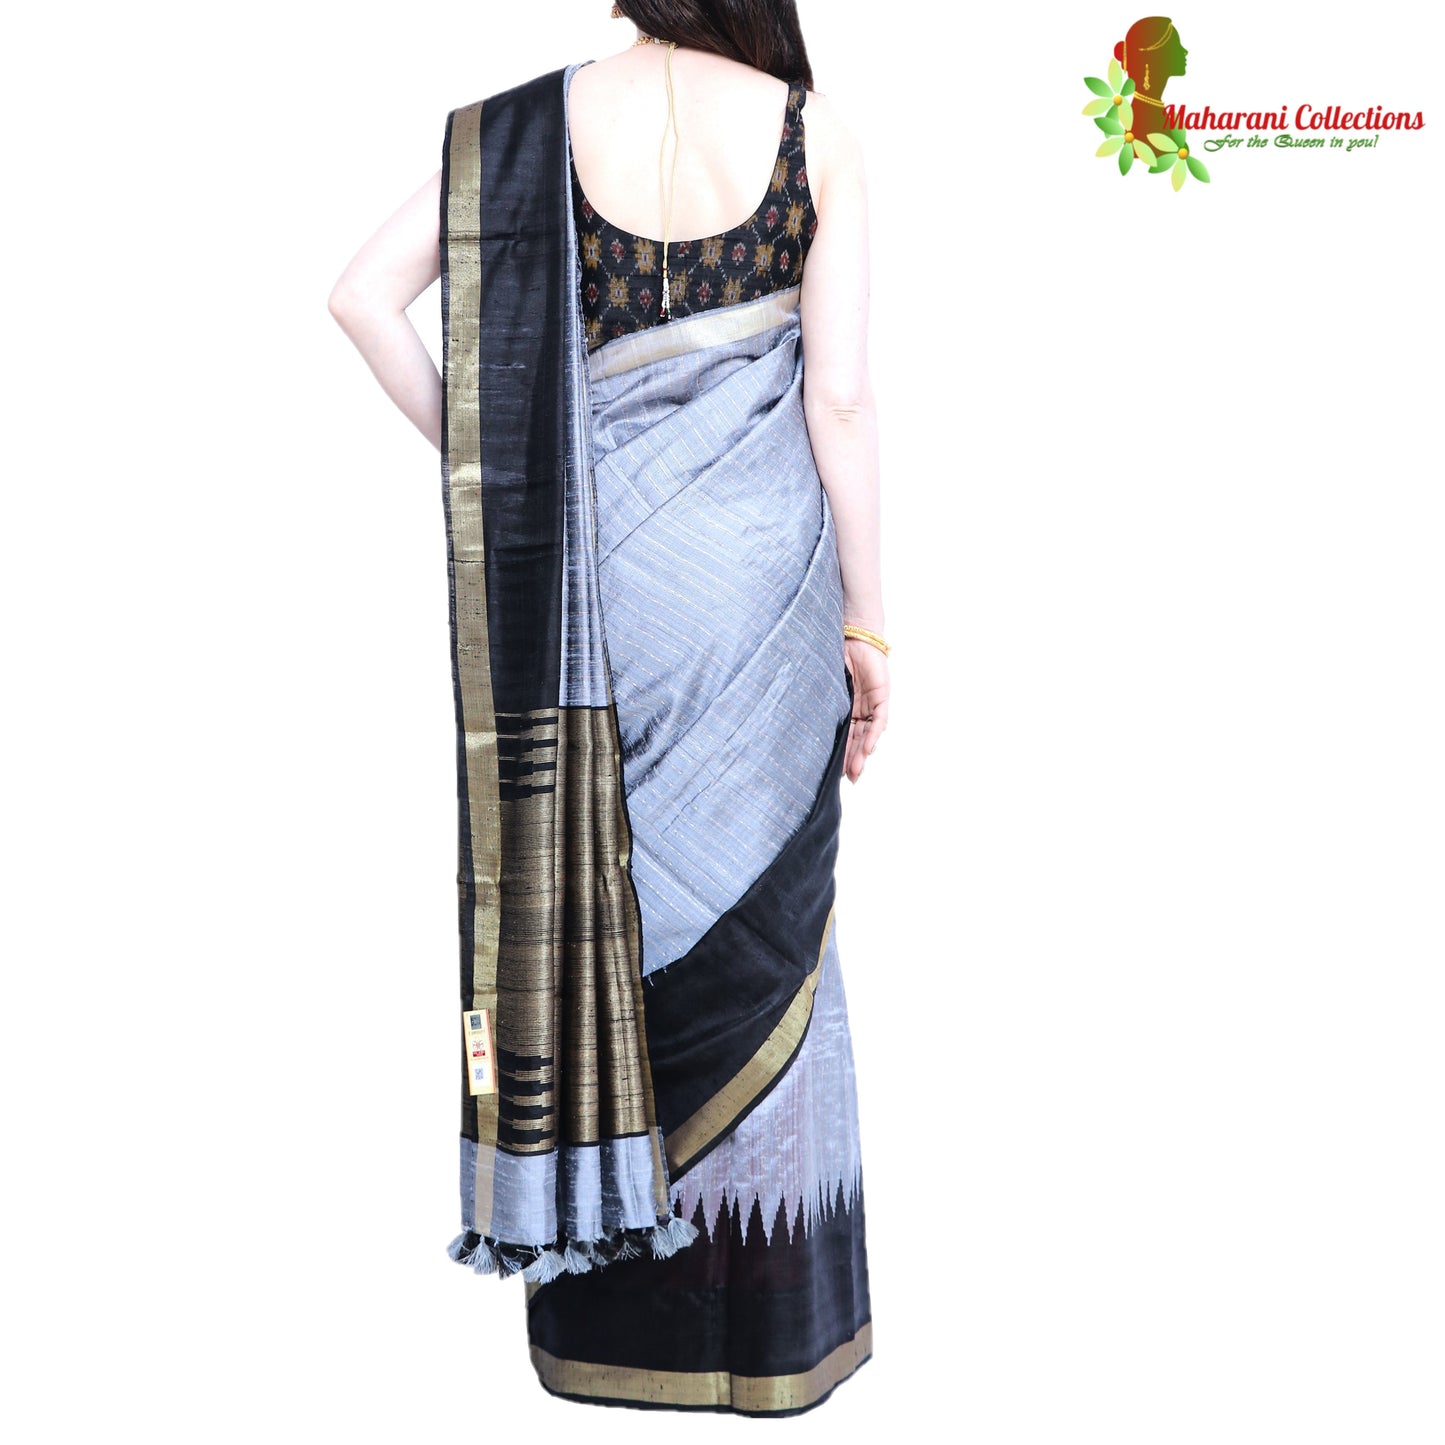 Pure Handloom Tussar Silk Saree - Slate Blue and Black with Golden Zari